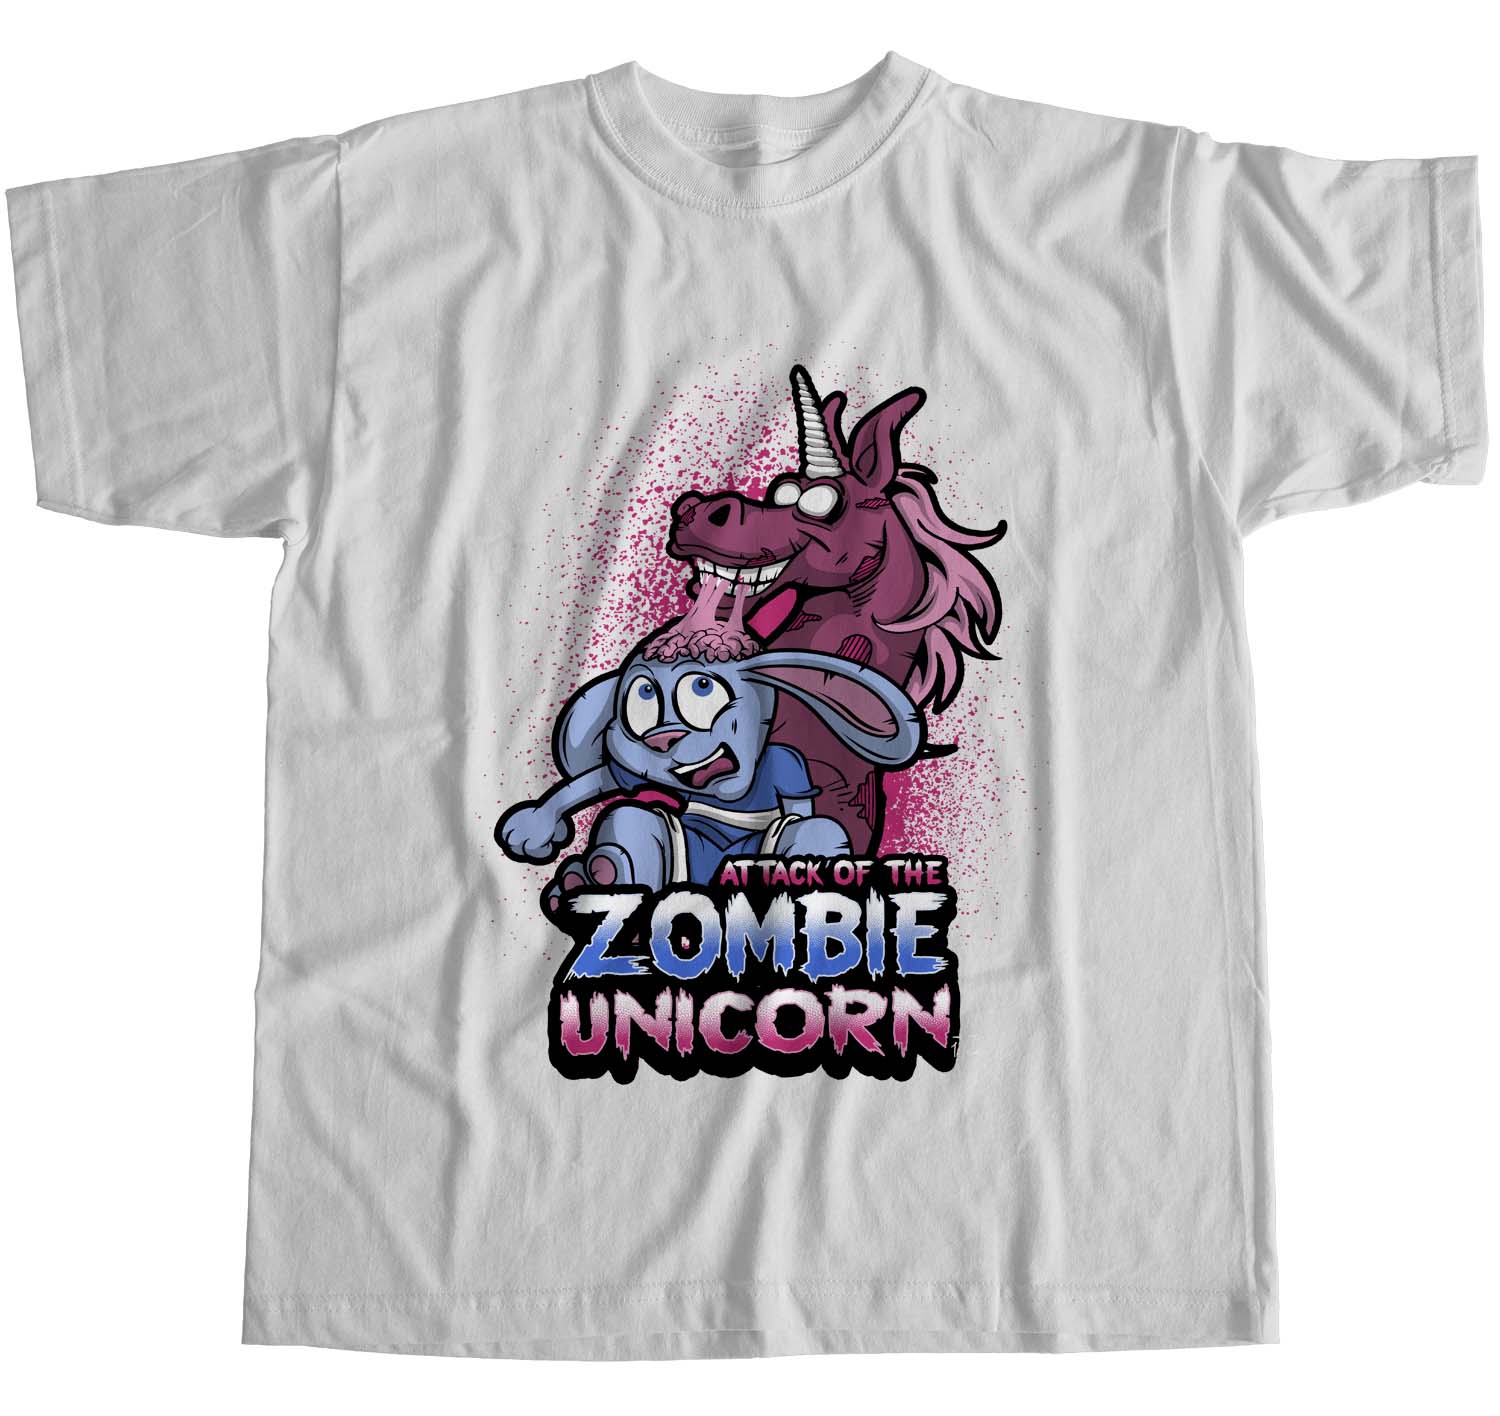 The zombi unicorn